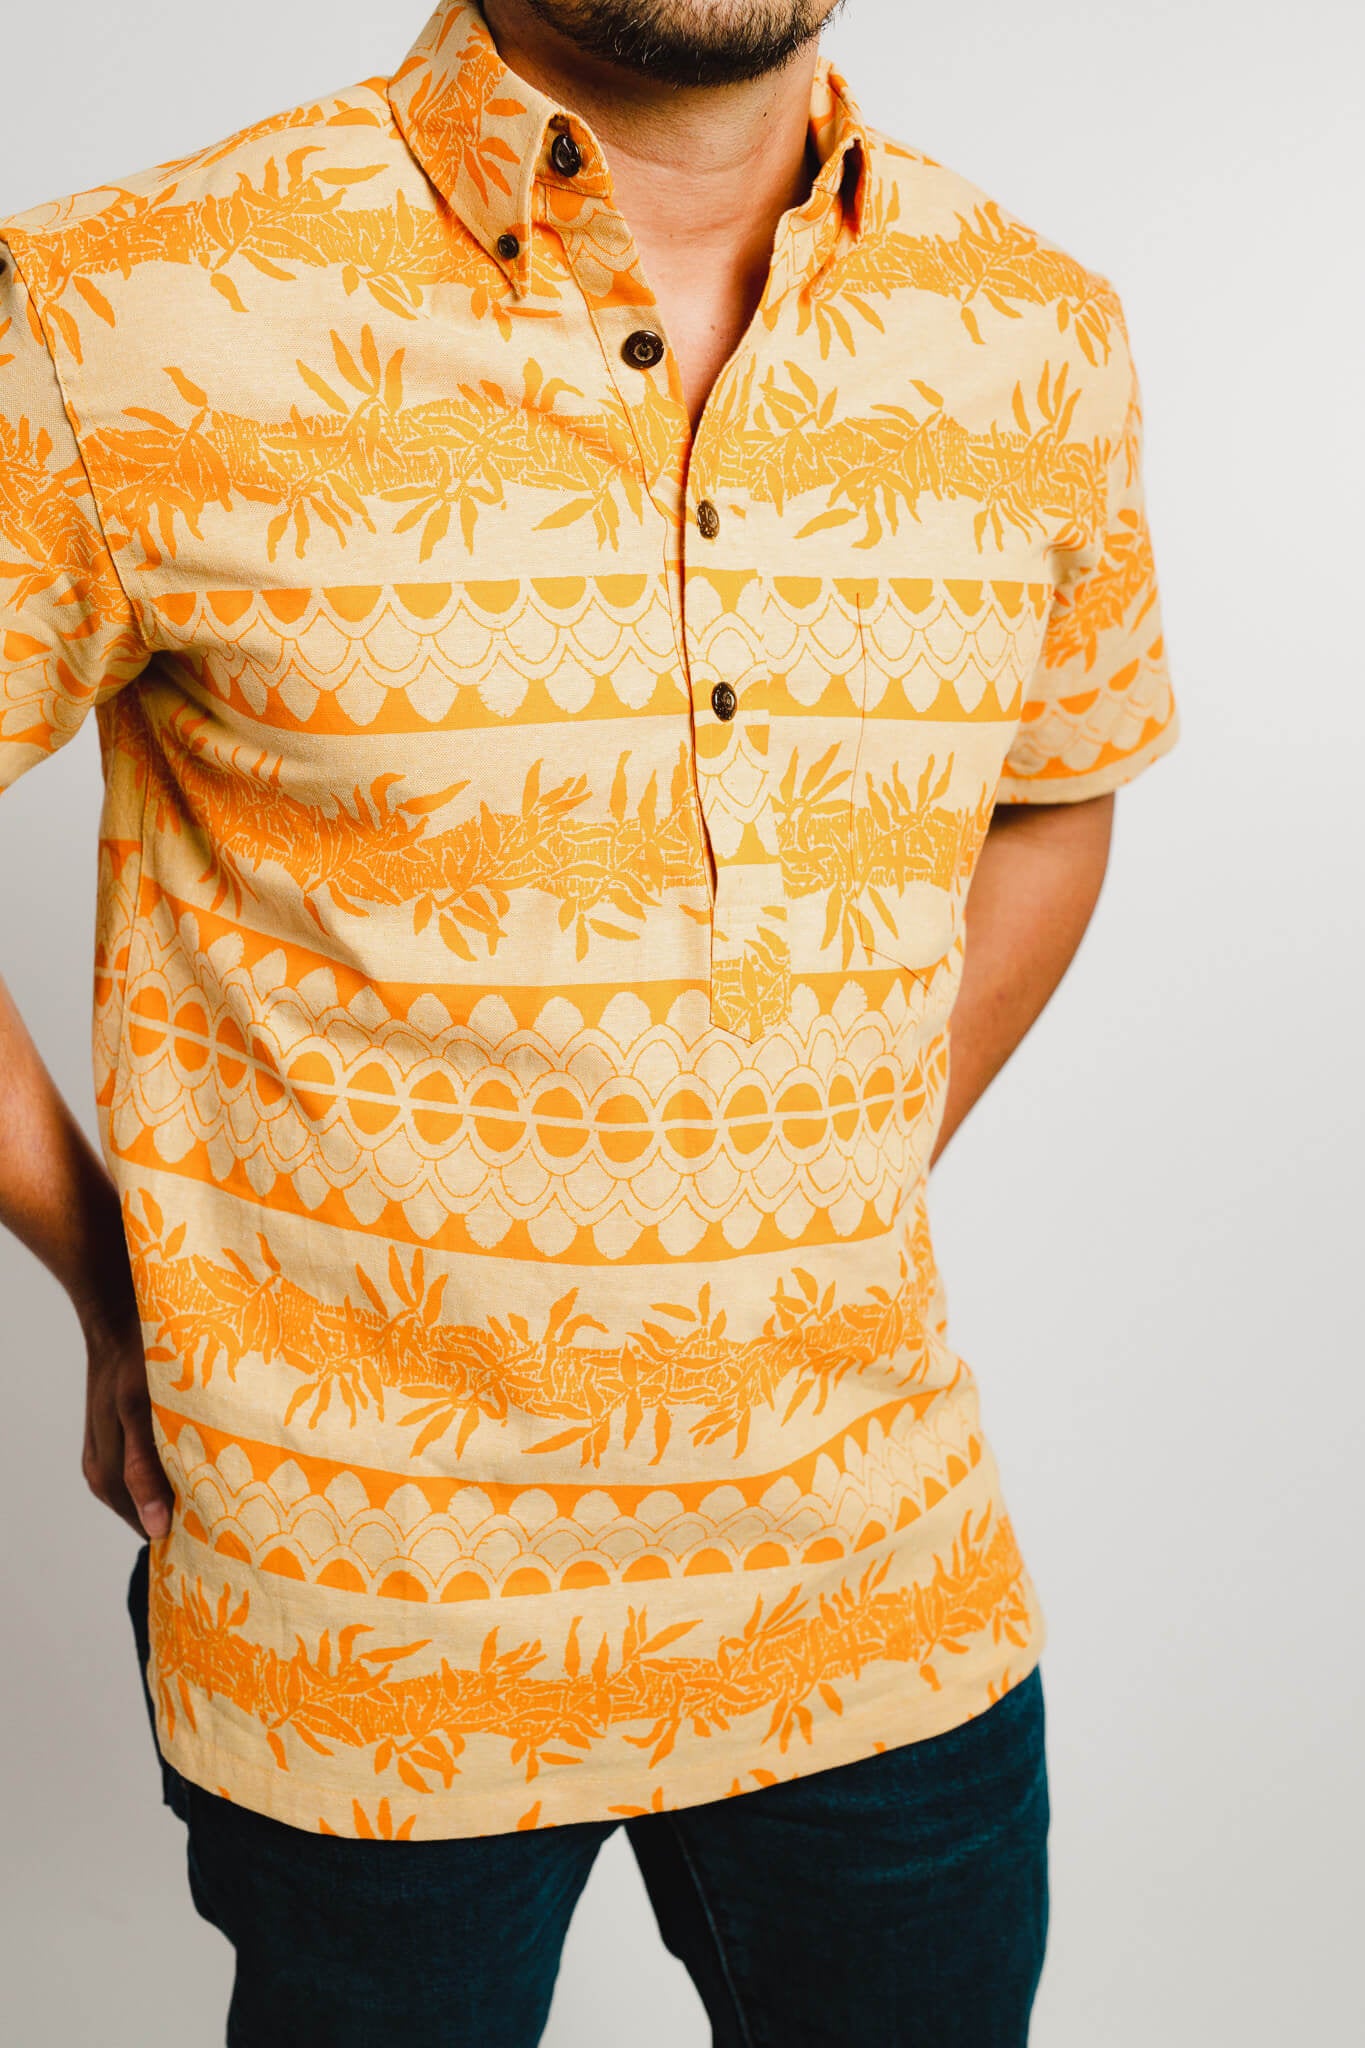 Maile ʻIlima Tapa Print in Kumquat Pull-over Aloha Shirt on Ochre Yarn Dyed  Linen